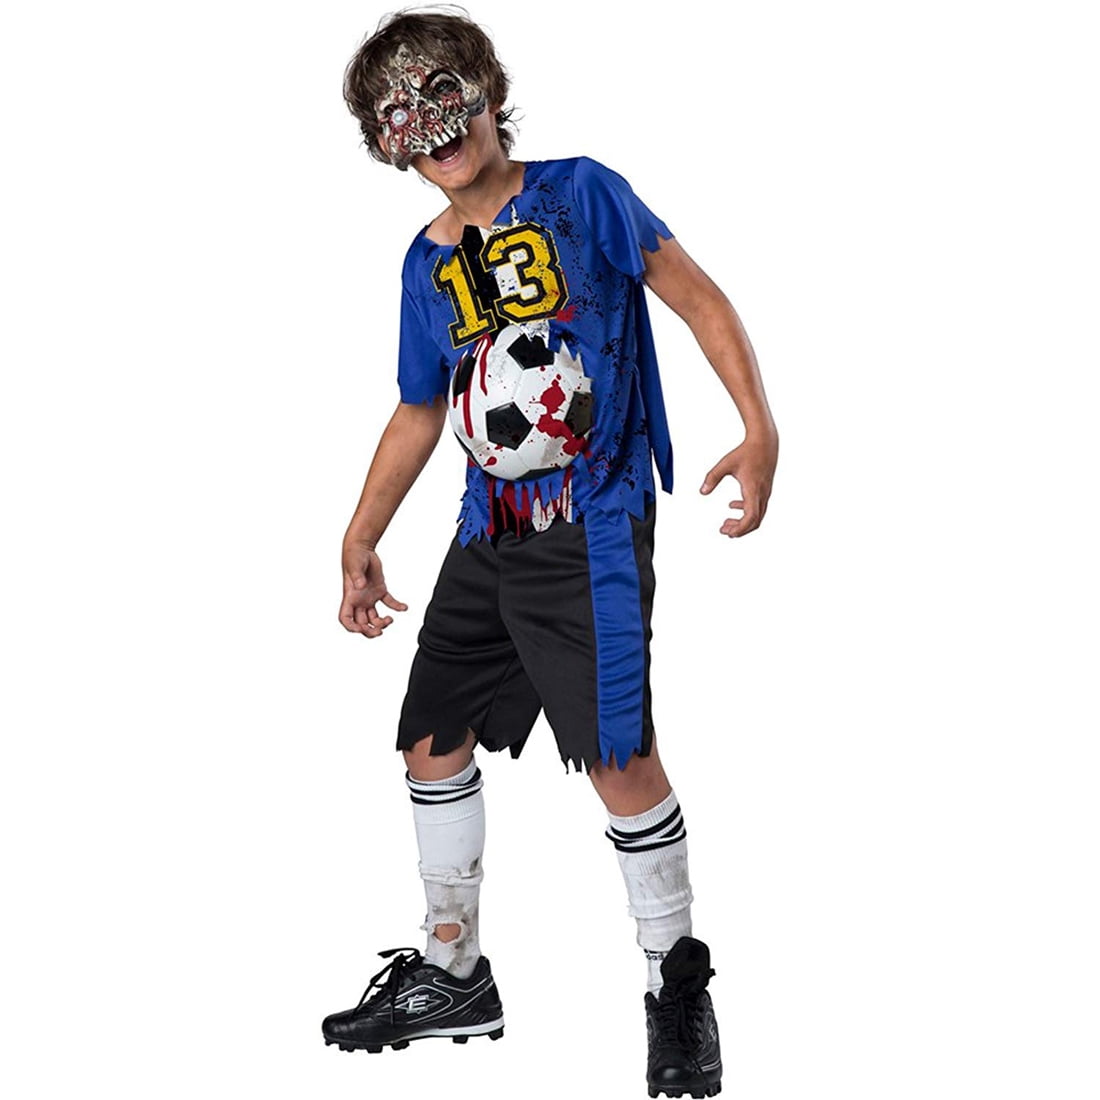 soccer player uniform. 